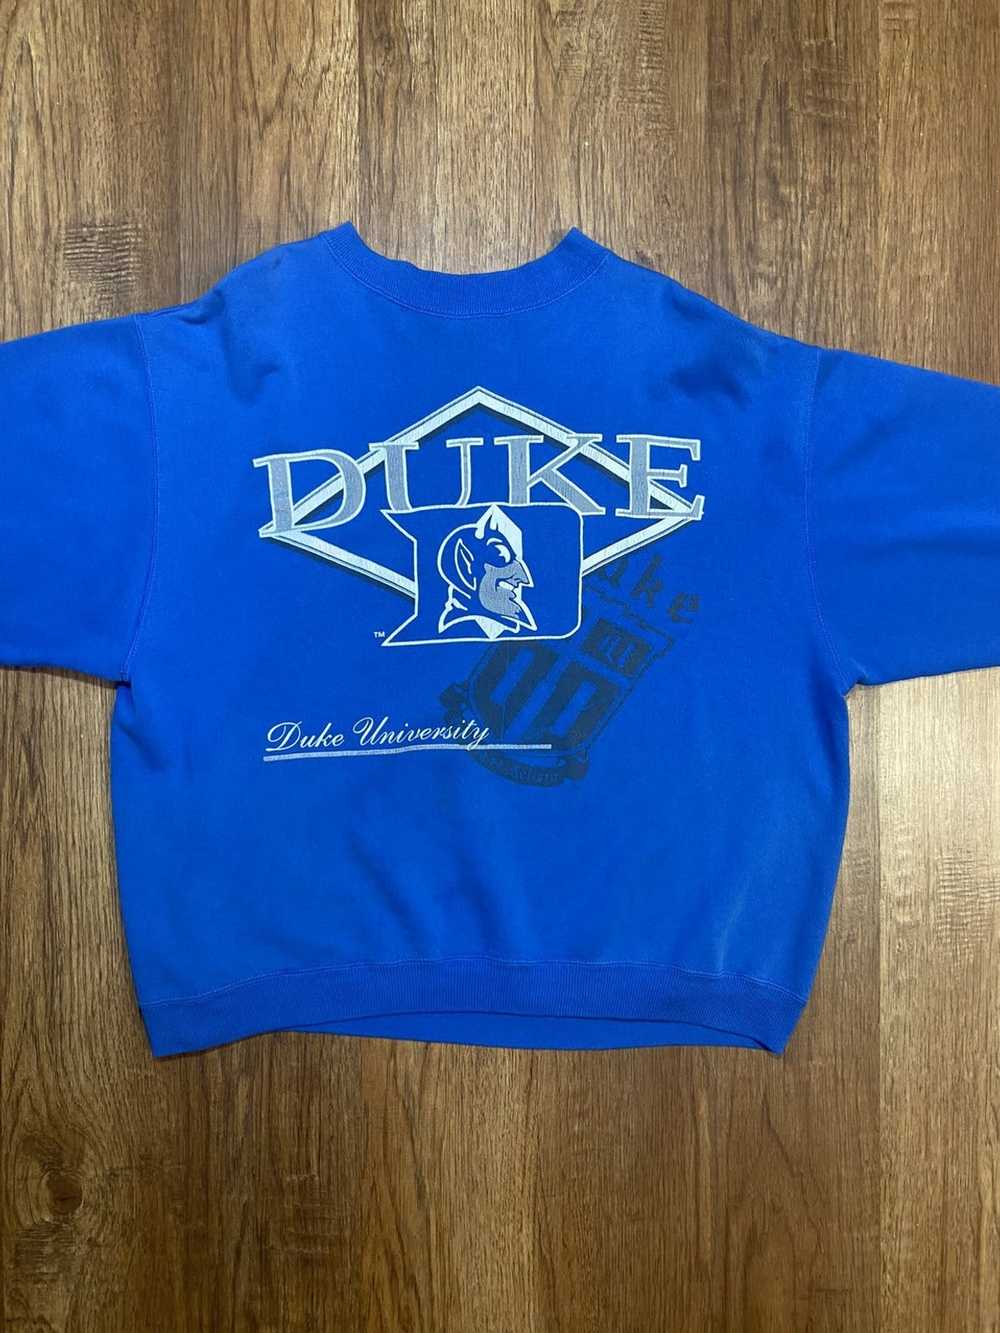 American College × Vintage Vintage Duke Sweatshirt - image 1